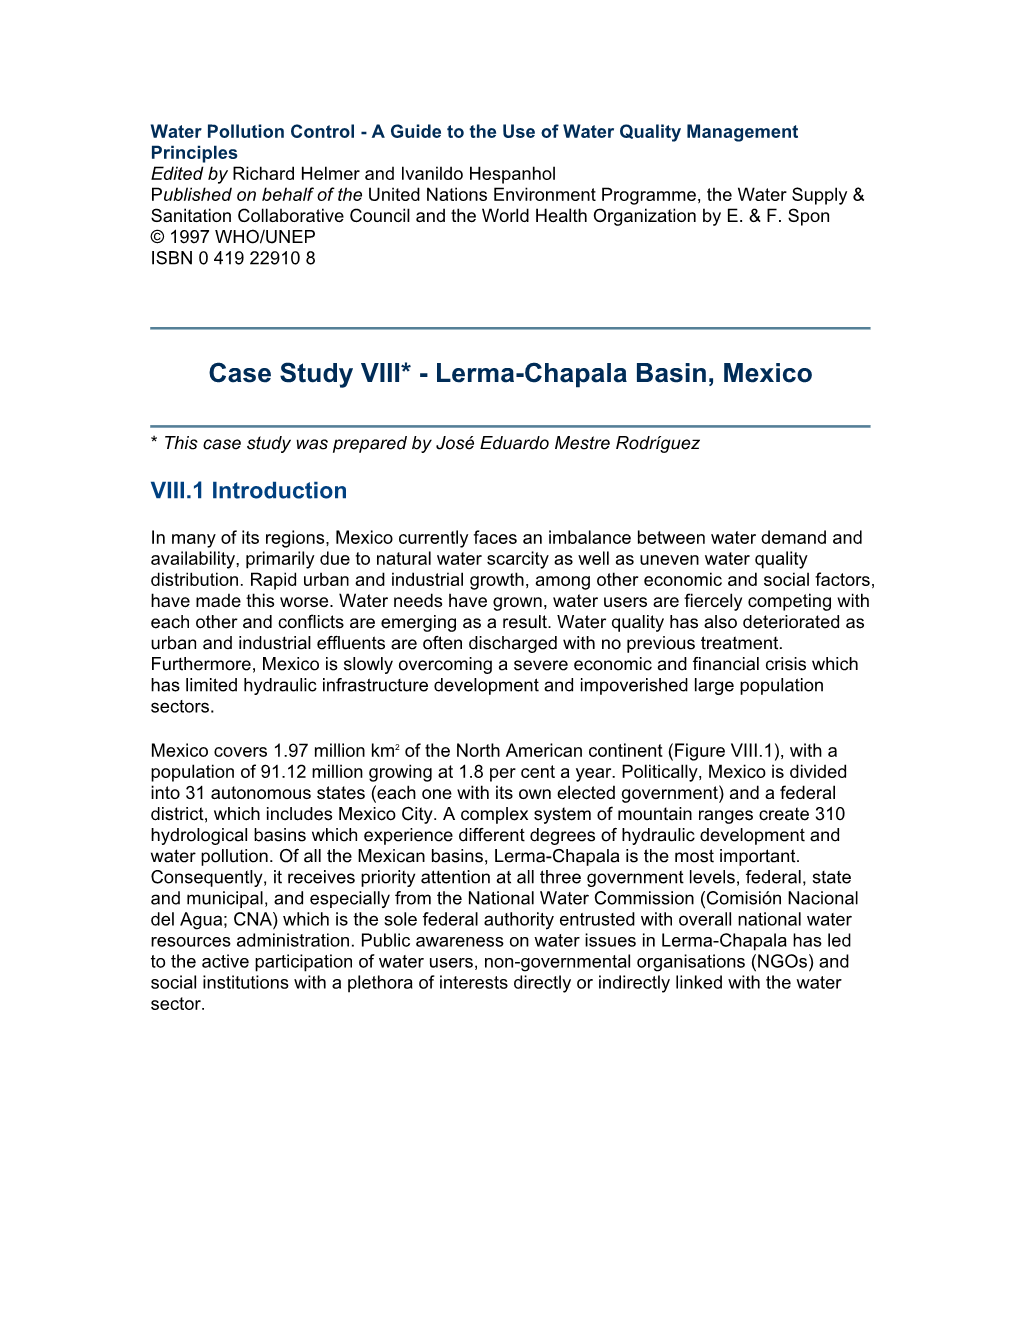 Case Study VIII* - Lerma-Chapala Basin, Mexico